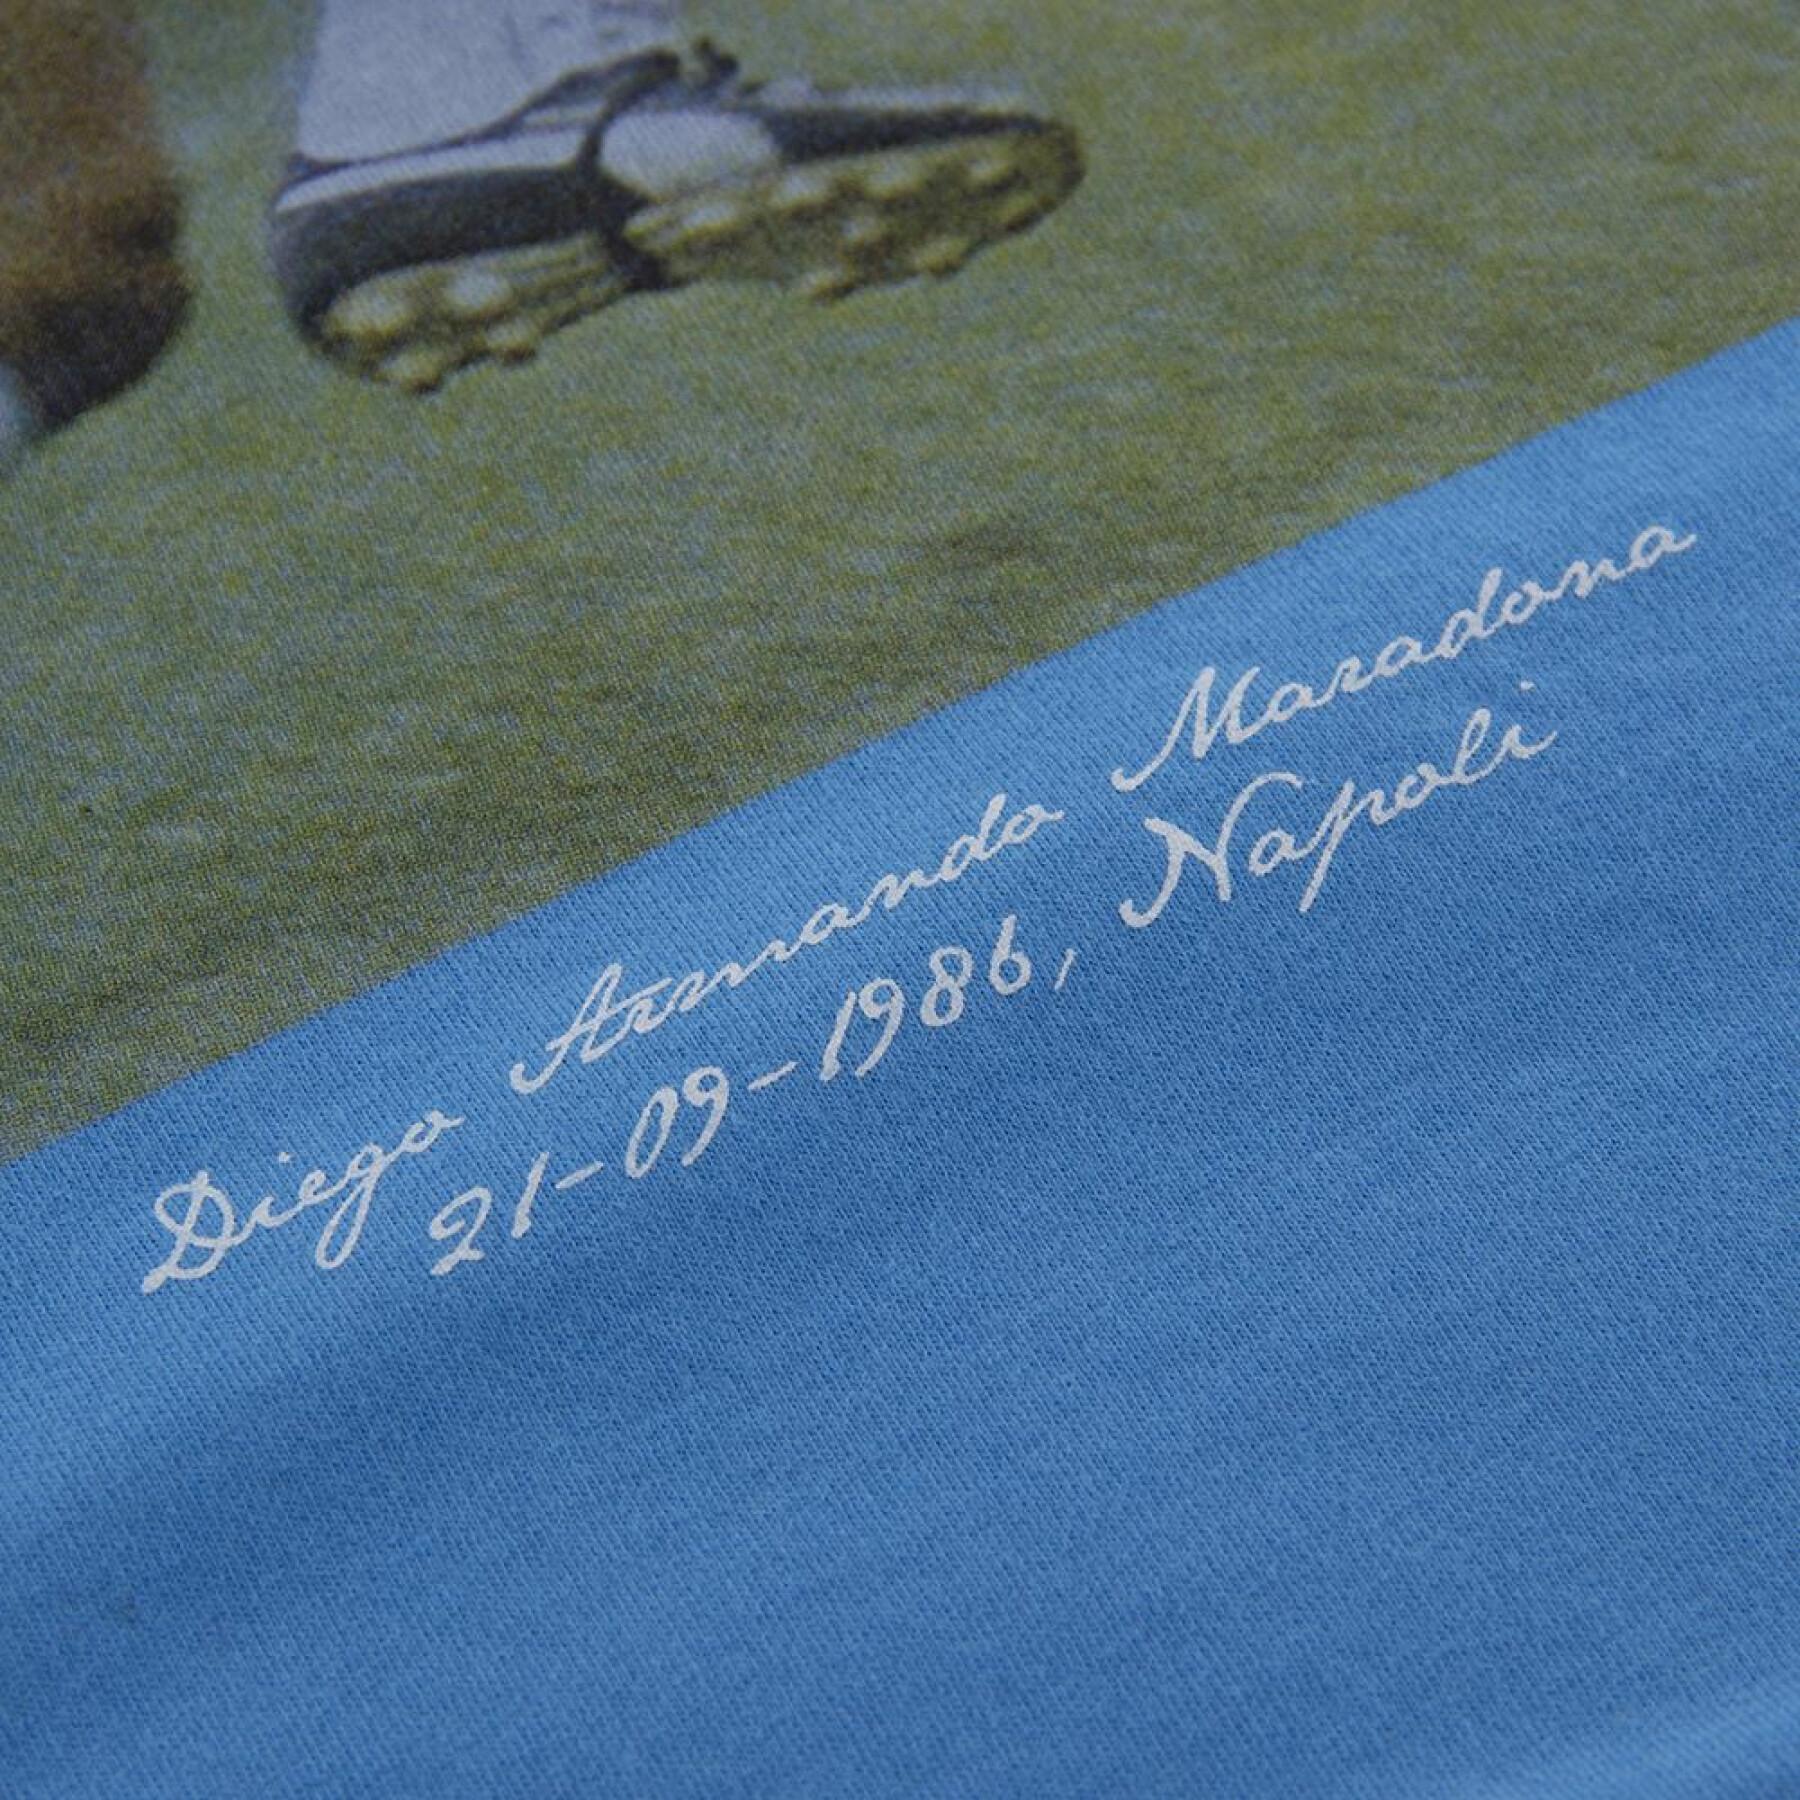 Outdoor T-shirt Copa SSC Napoli Maradona